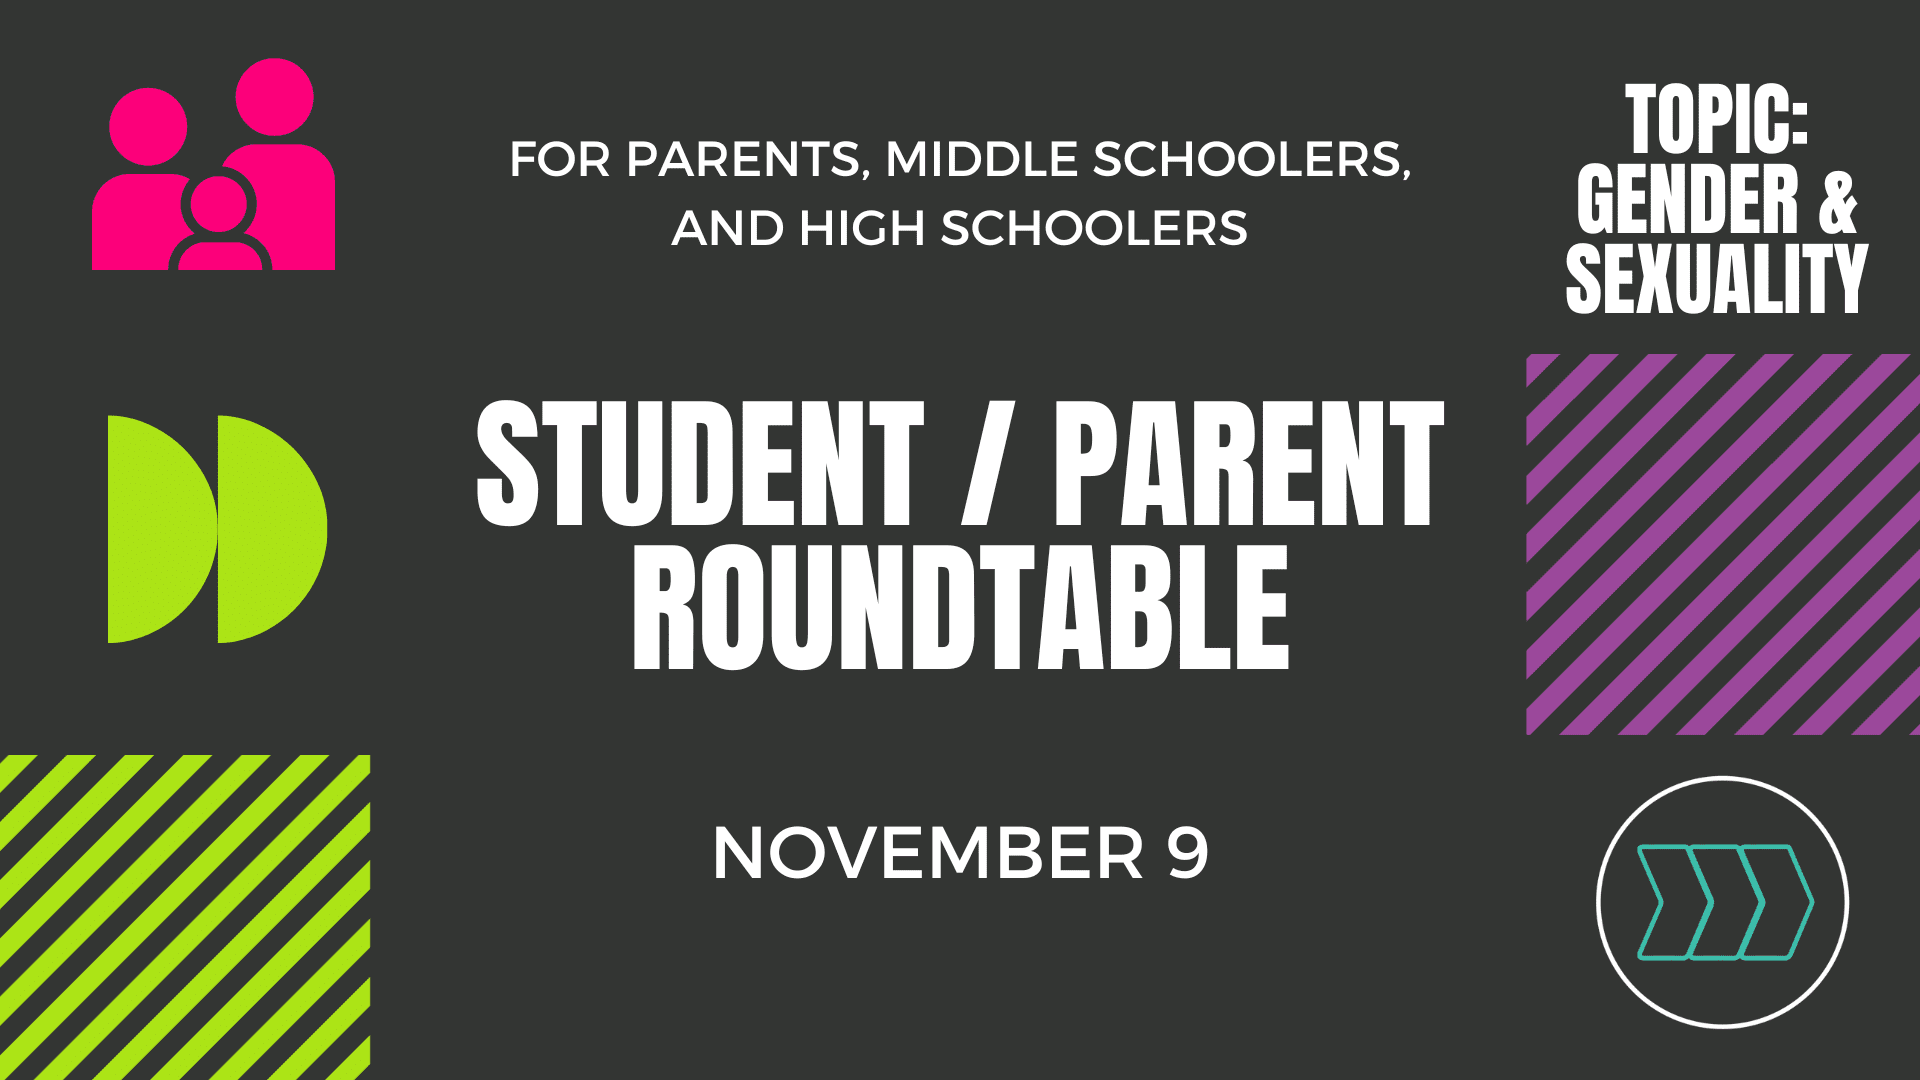 Copy of Student Parent Roundtable Gender - Rescheduled: Student/Parent Roundtable: Gender & Sexuality